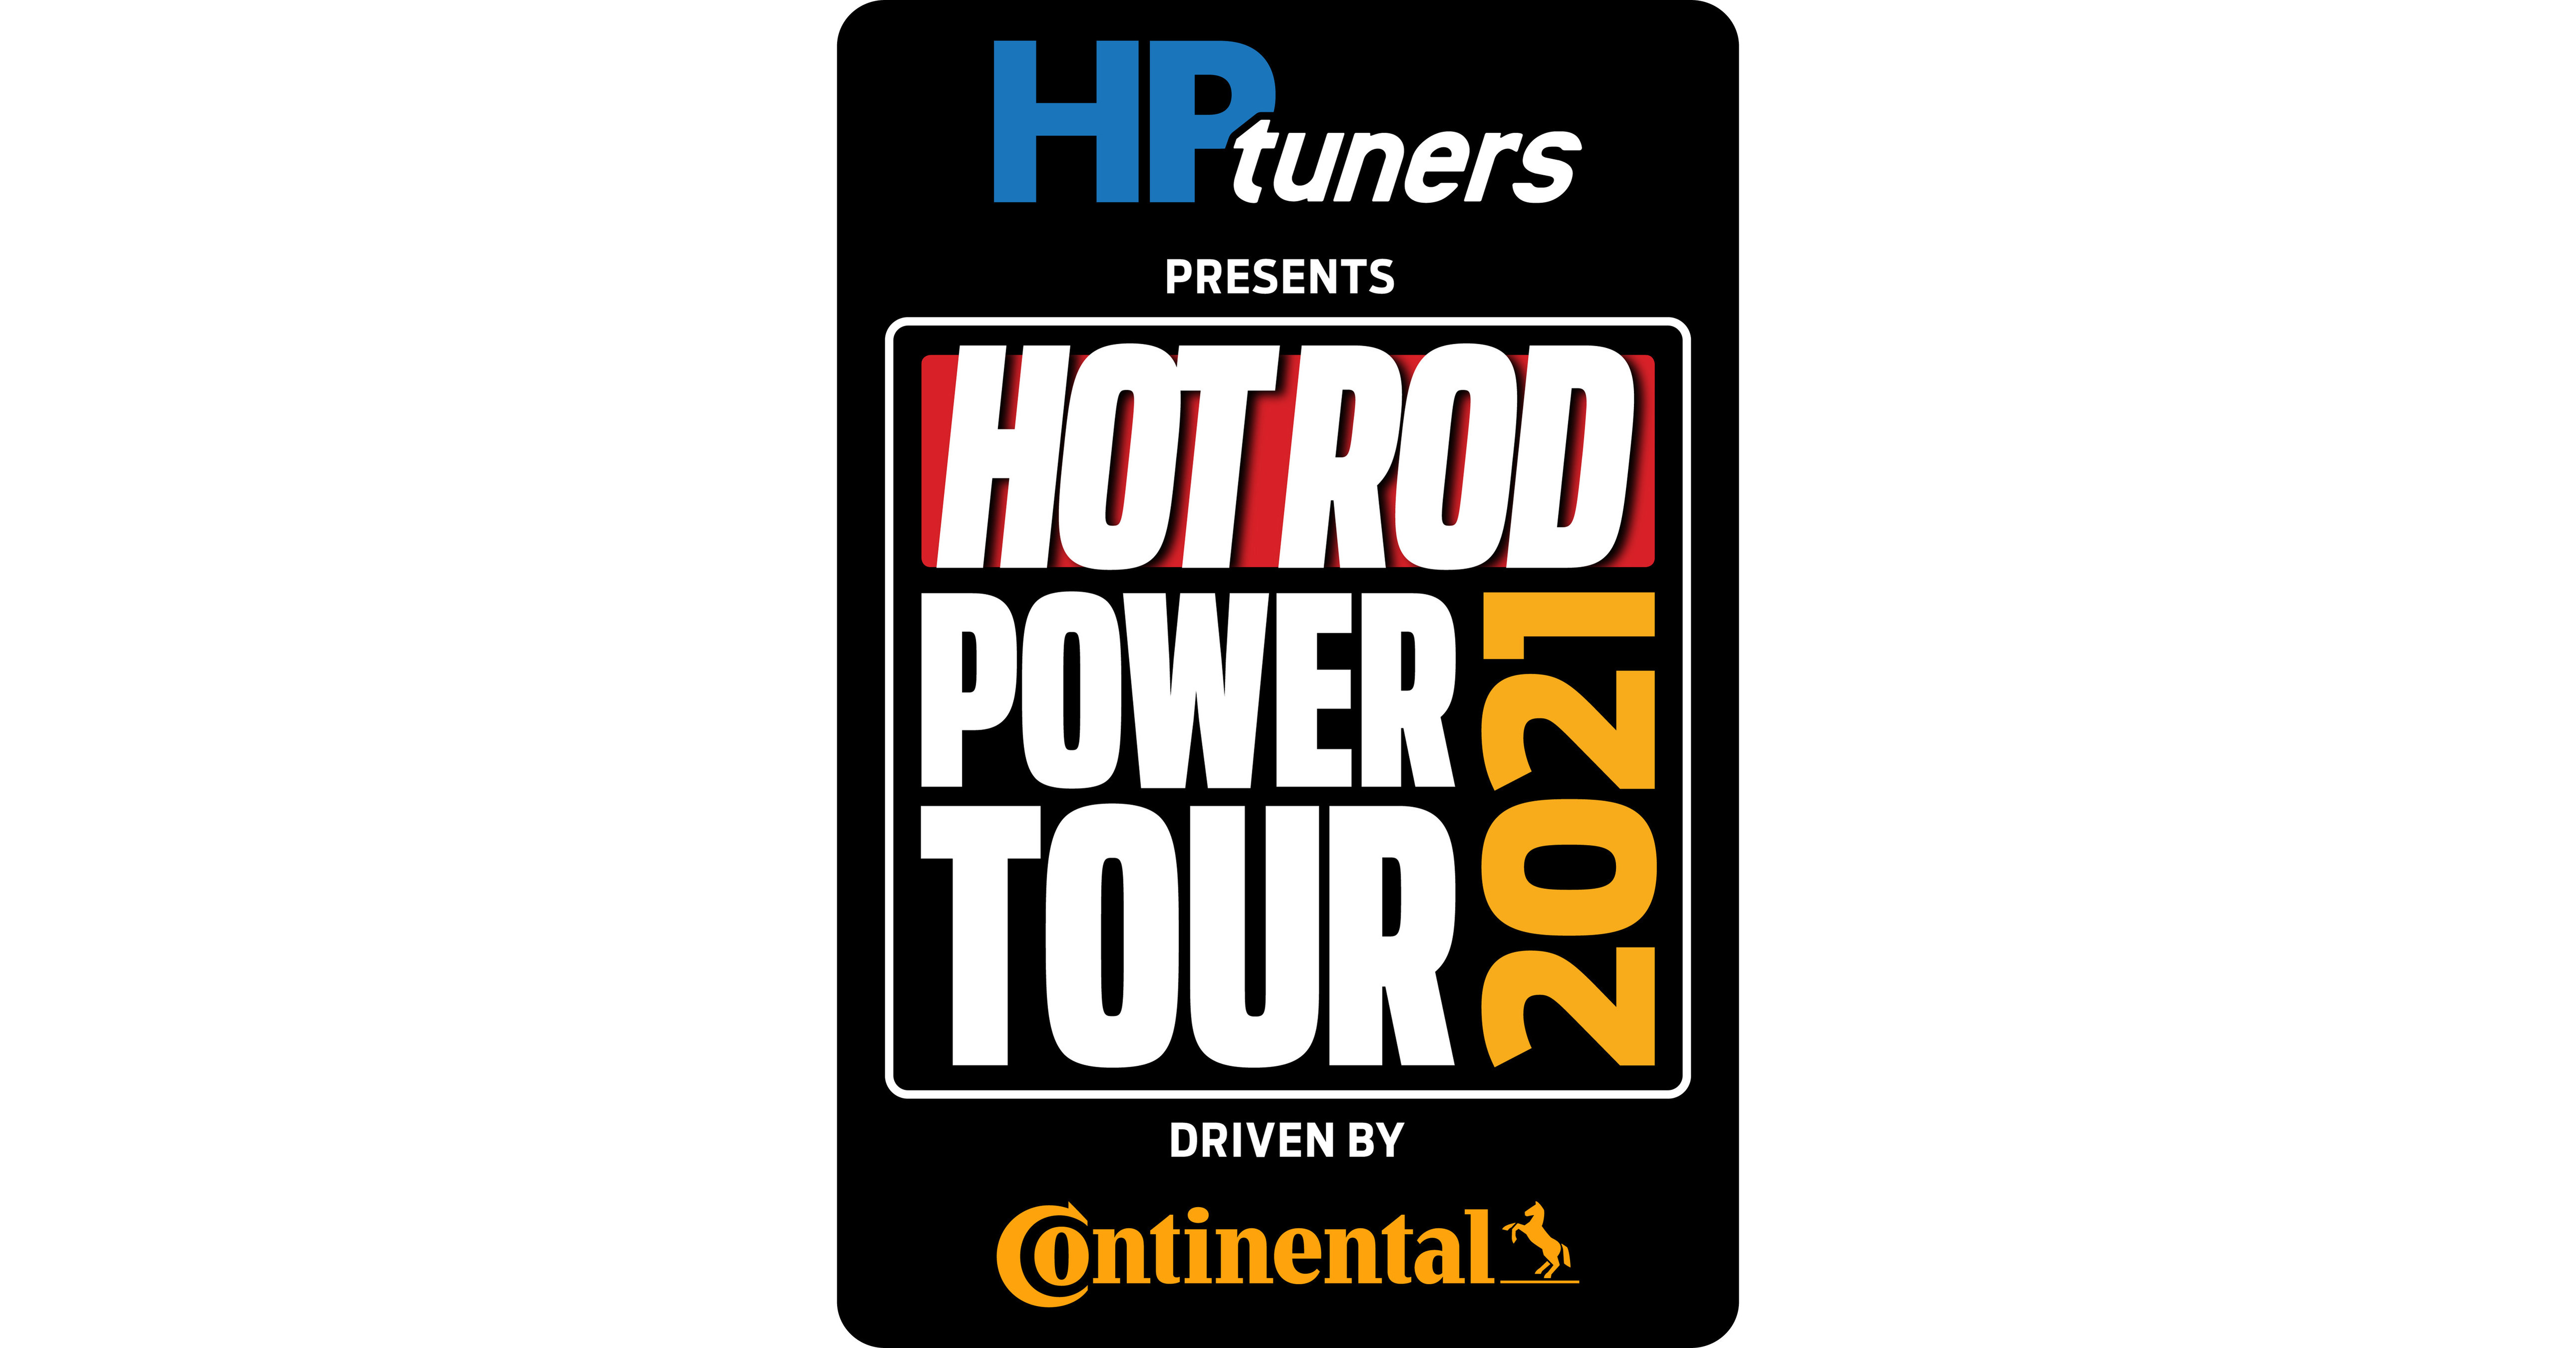 hot rod power tour 1997